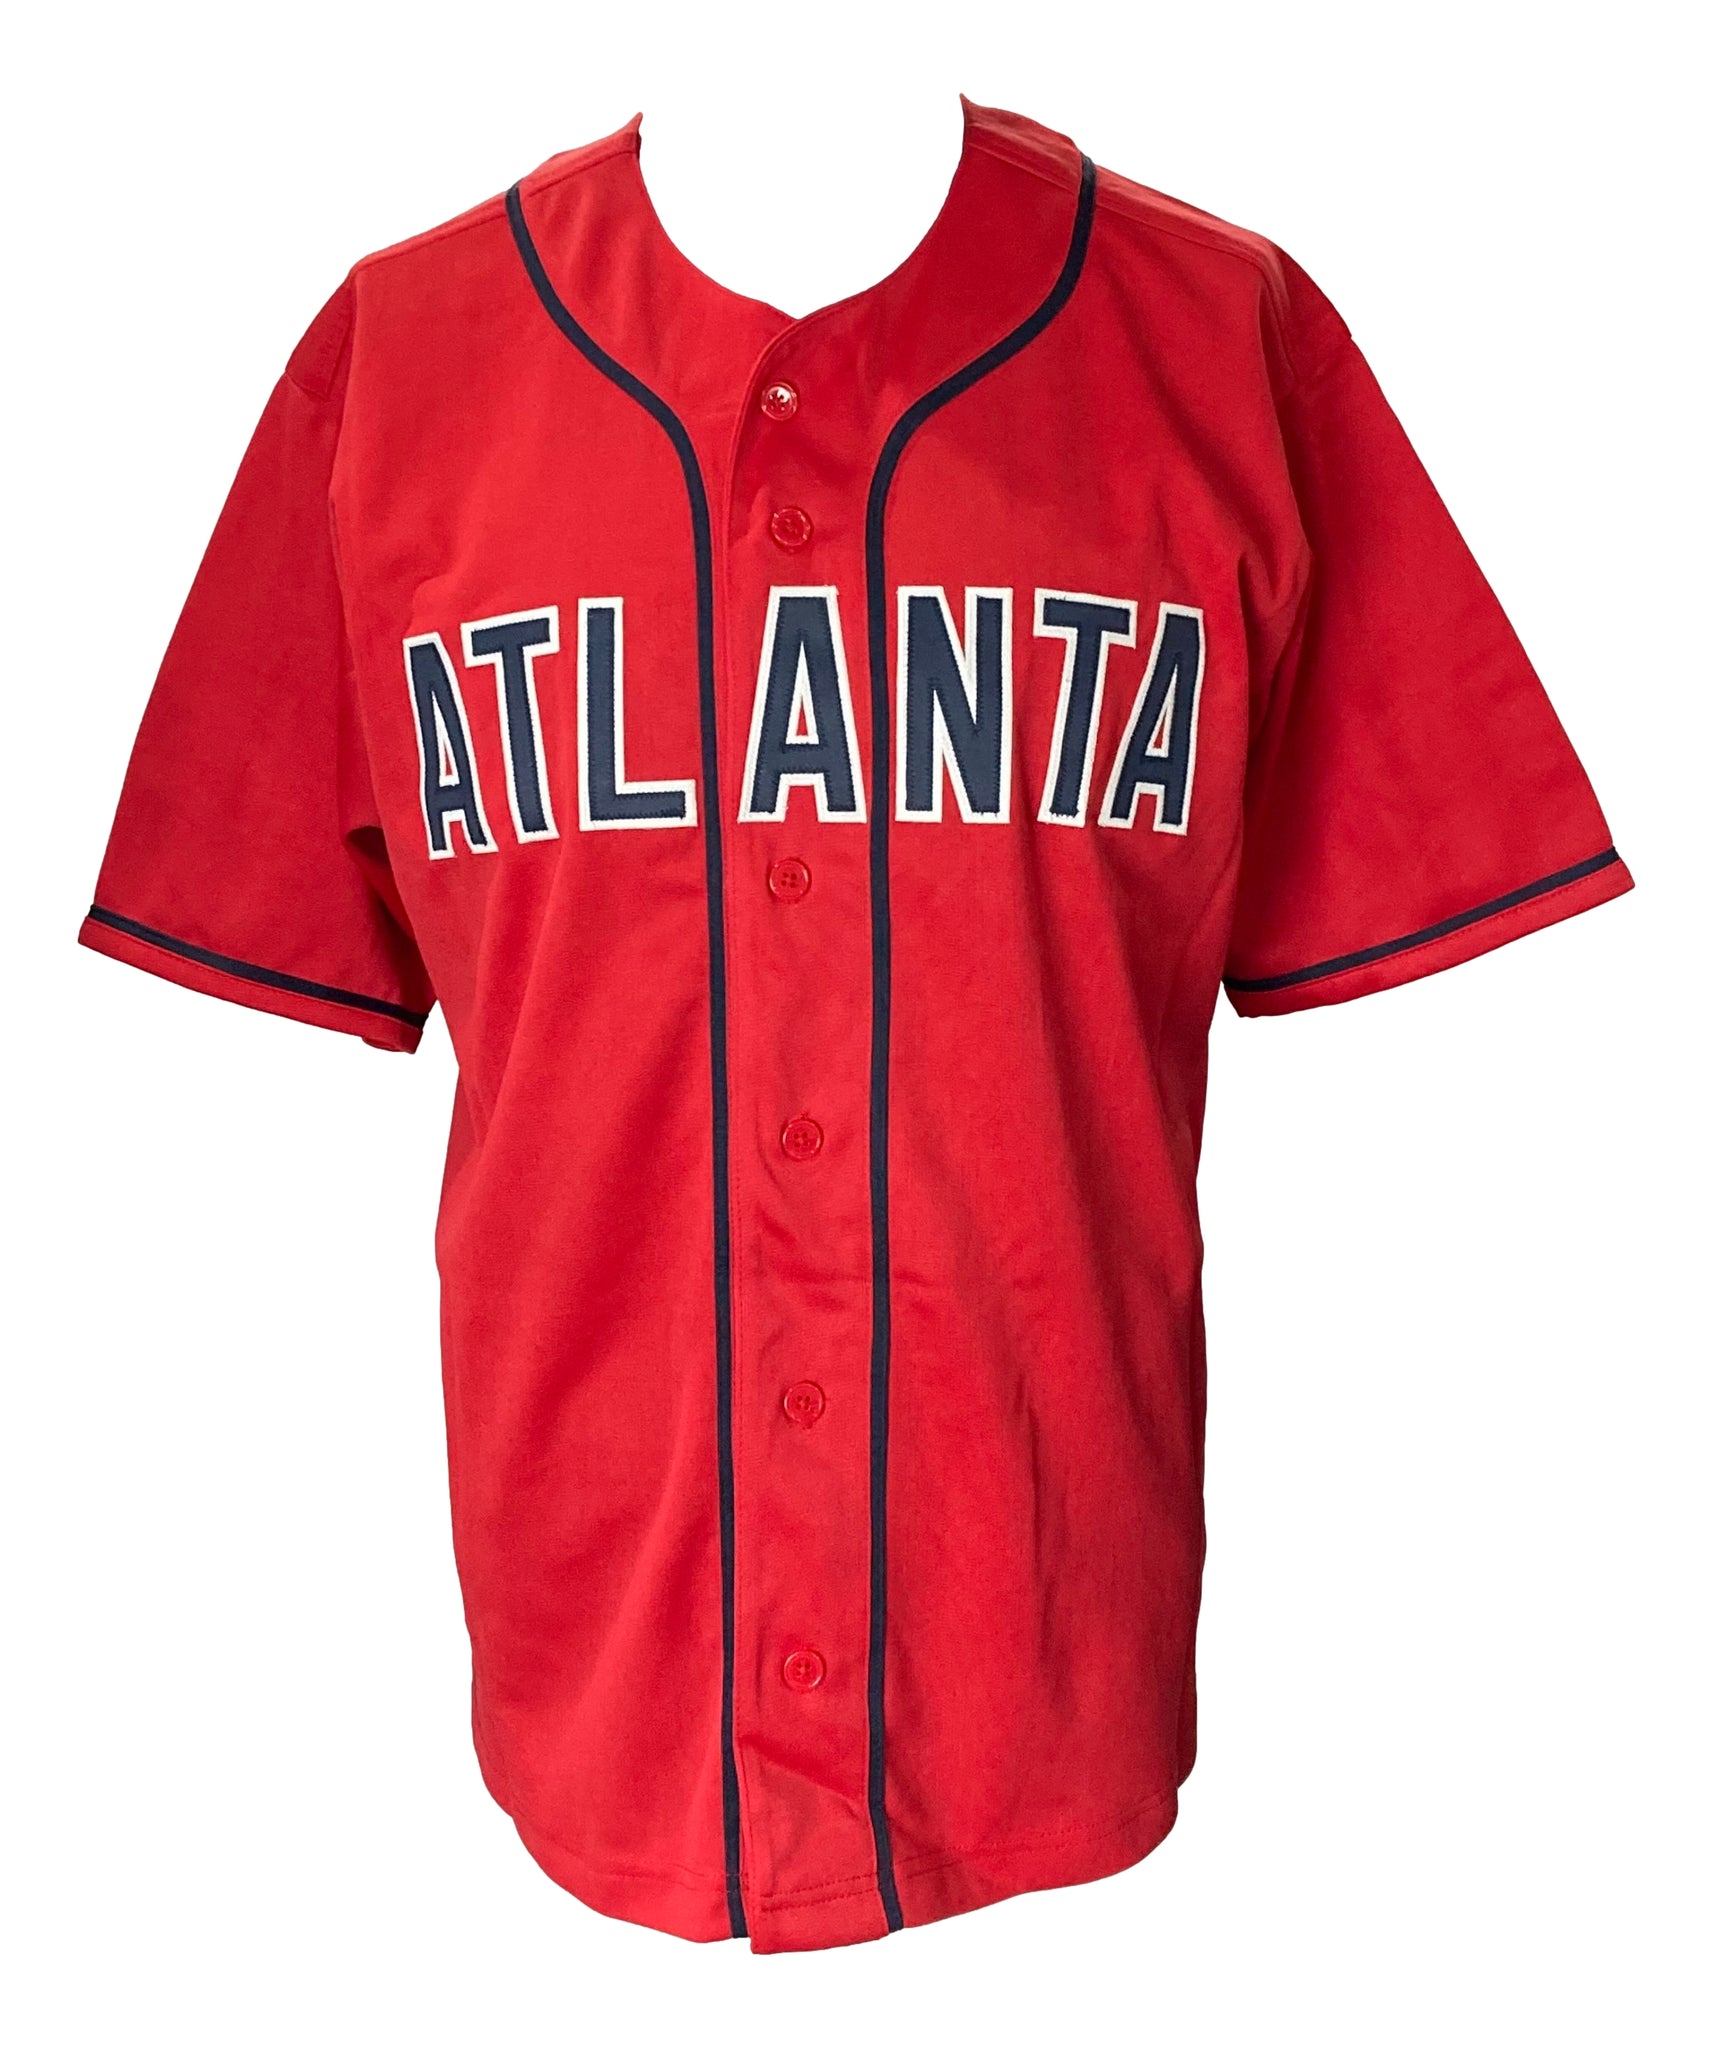 Atlanta Braves Inspired Baseball Jersey 